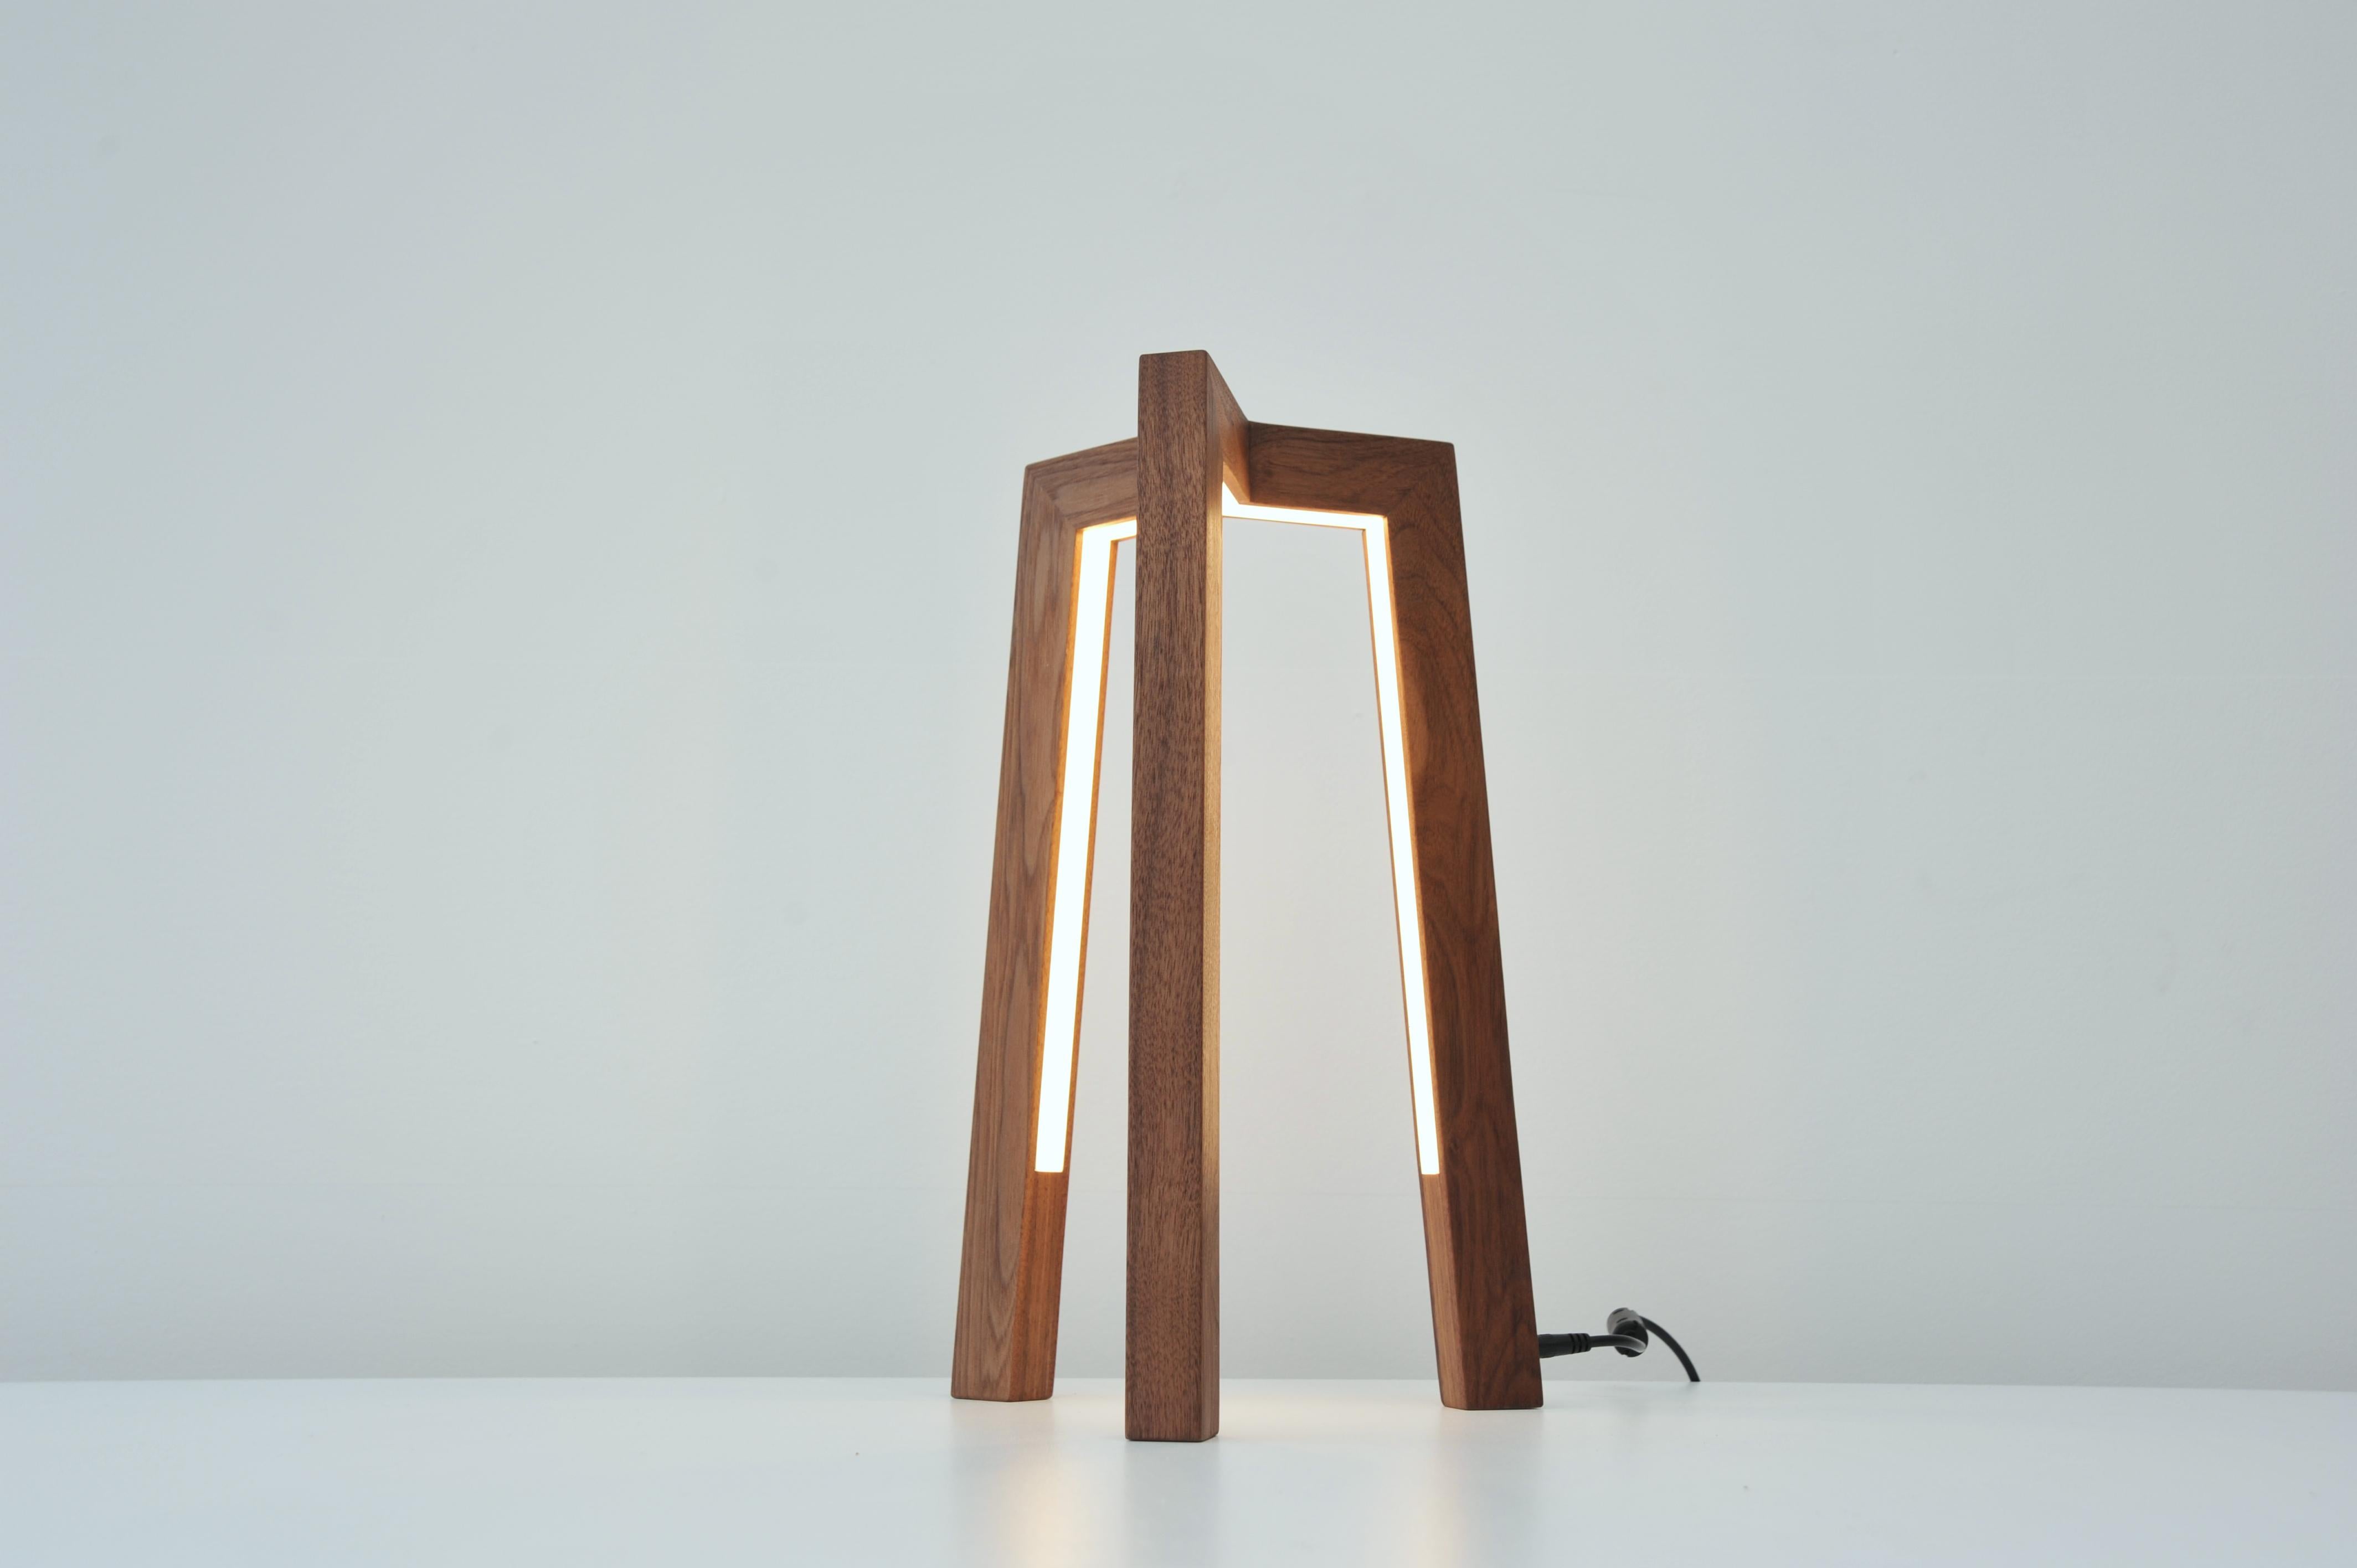 Oak junction table light by Hollis & Morris.
Dimensions: 10.5